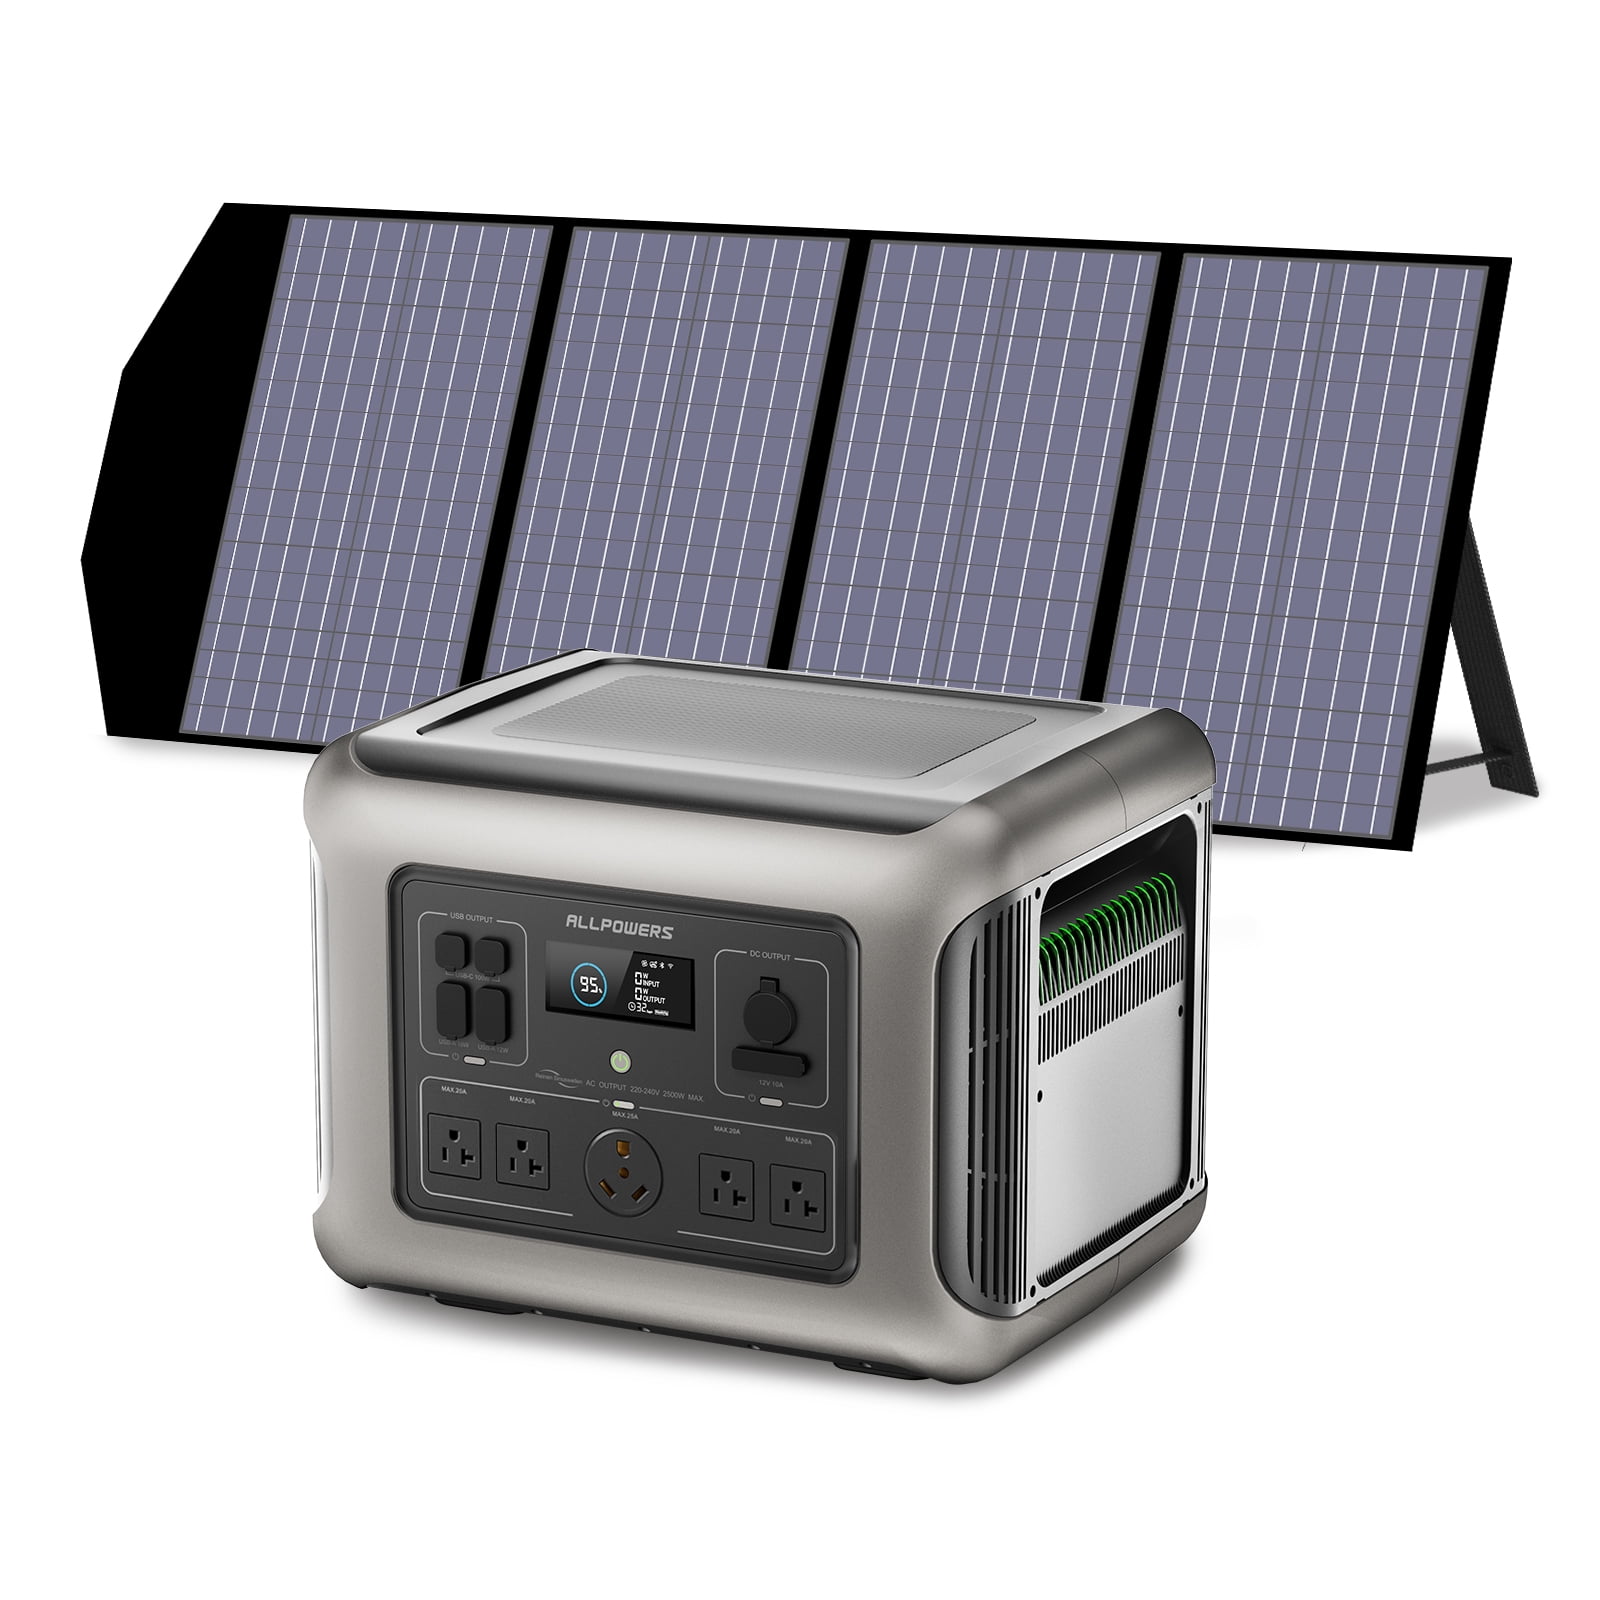 ALLPOWERS R2500 Portable Solar Generator Kit, 140W Foldable Solar